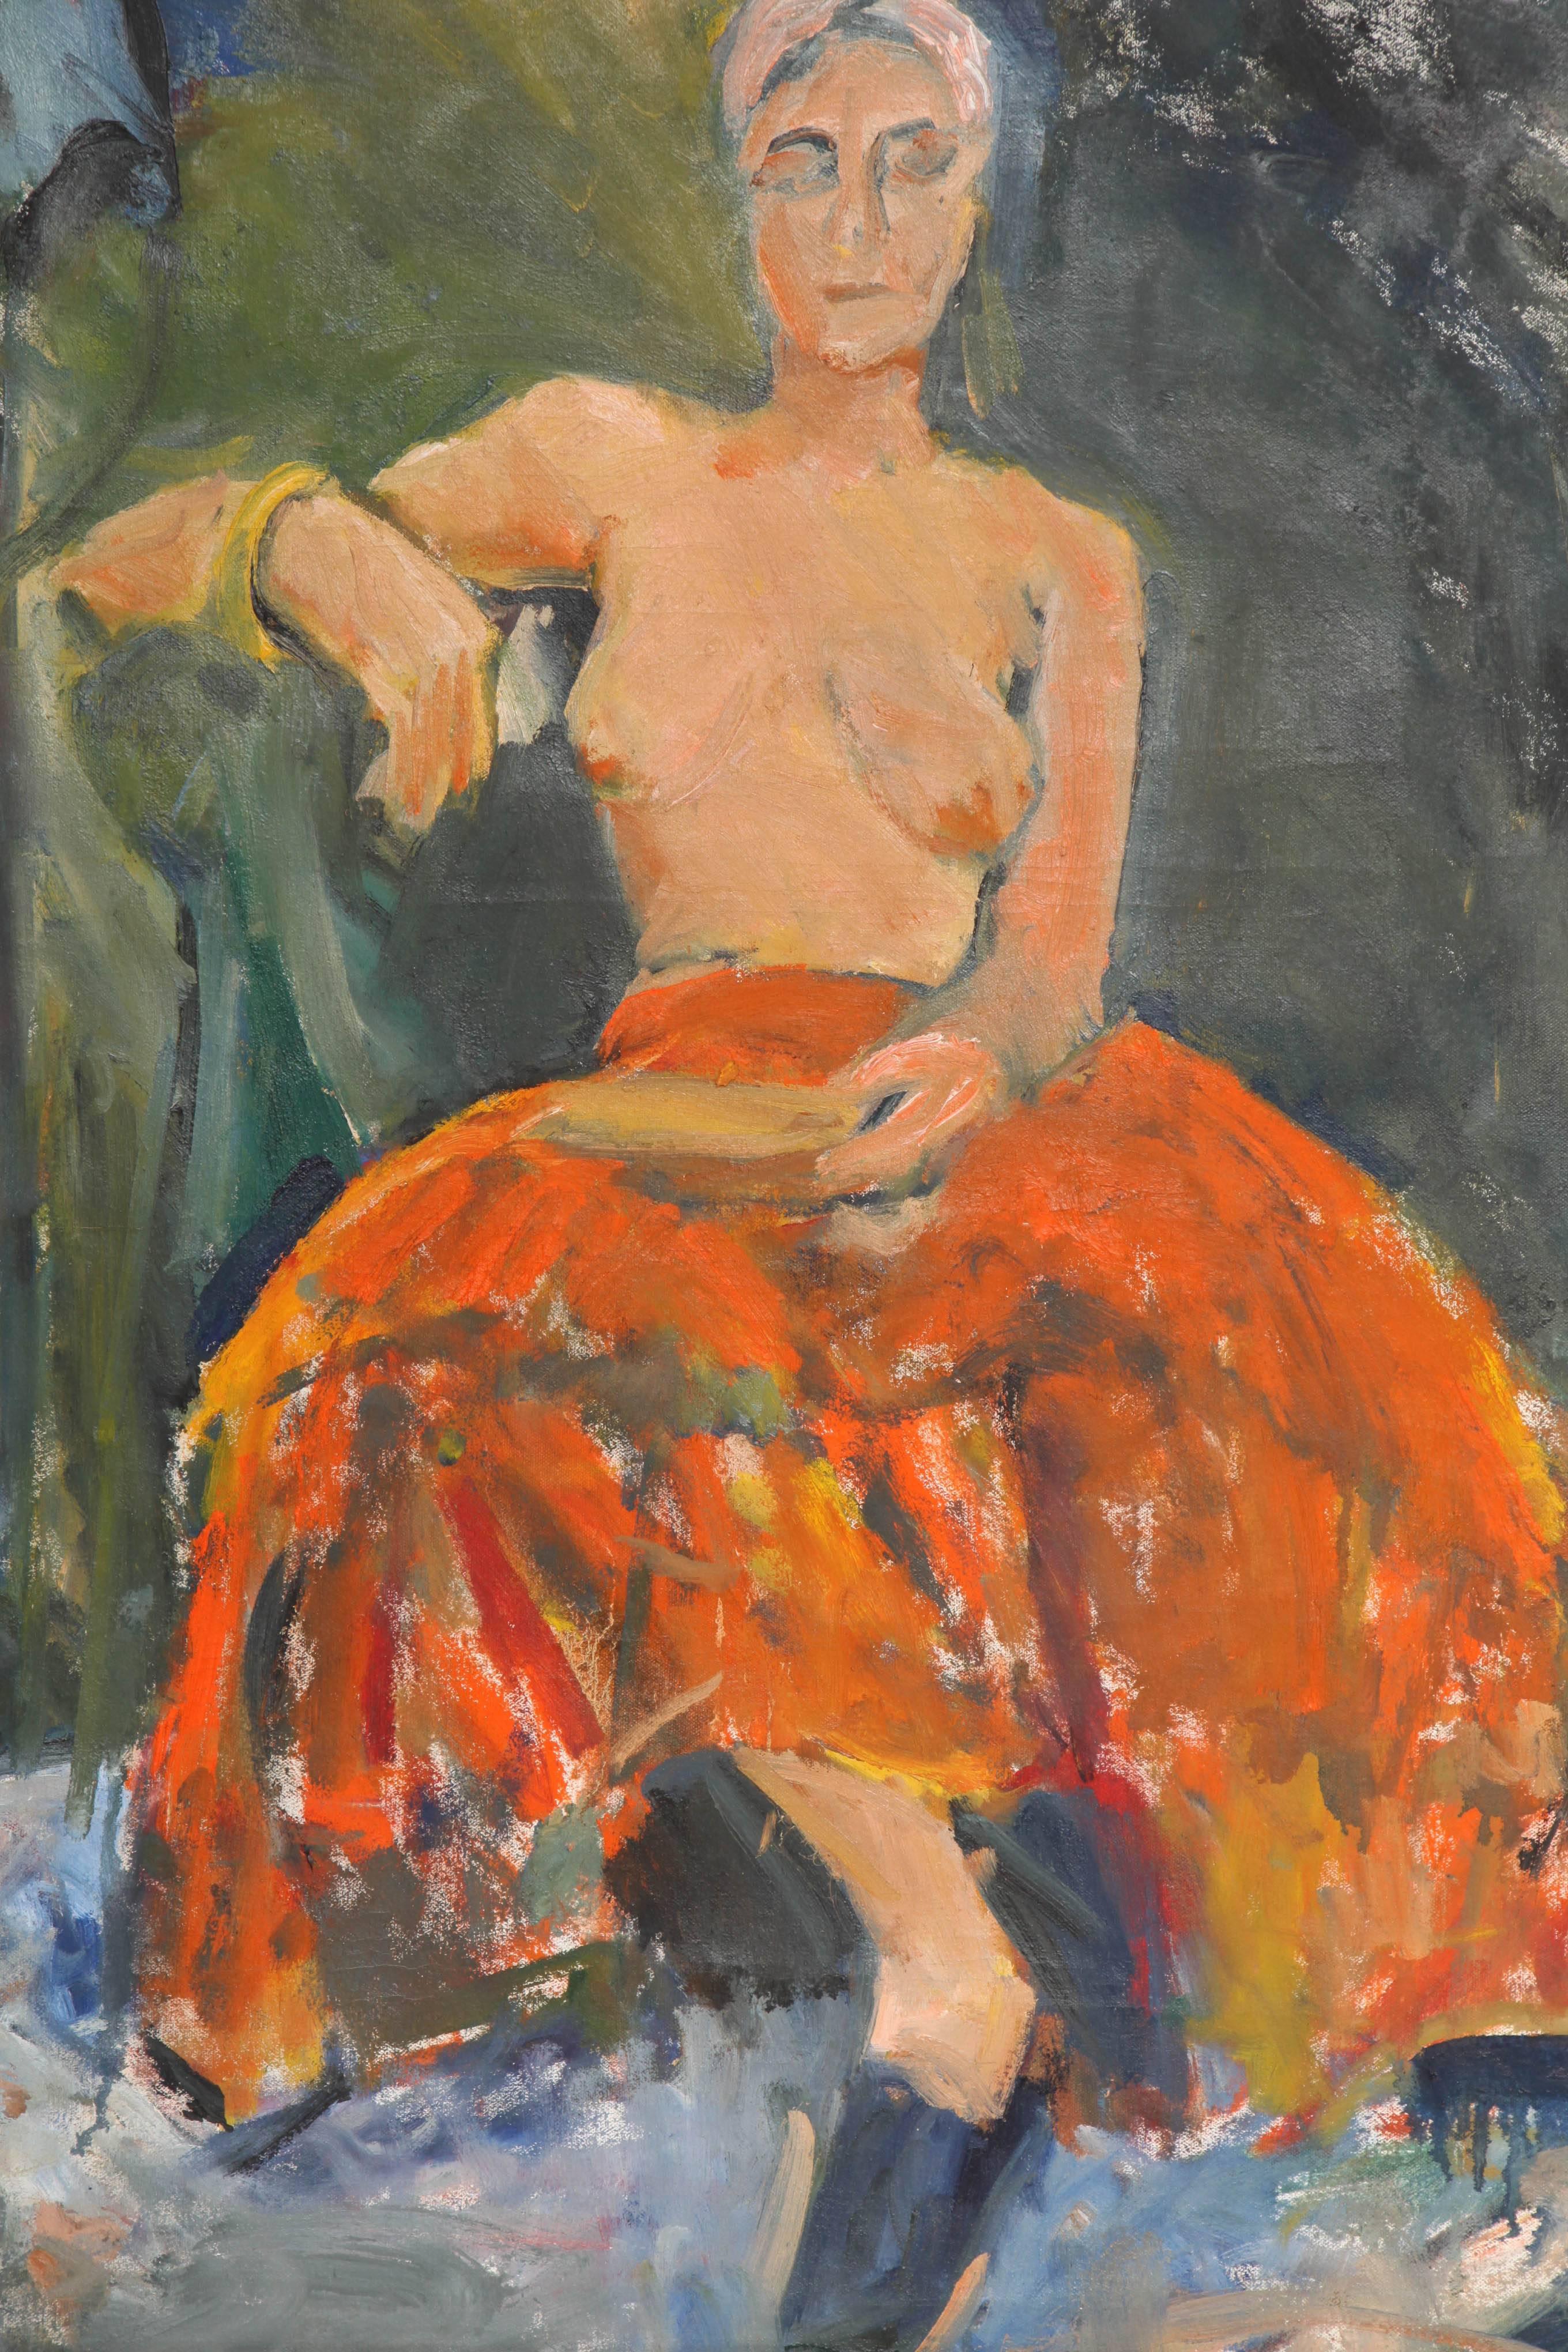 American Painting by Eduardo Rouario, Mid-Century Modern, 1968, Modern Art, Orange/Green